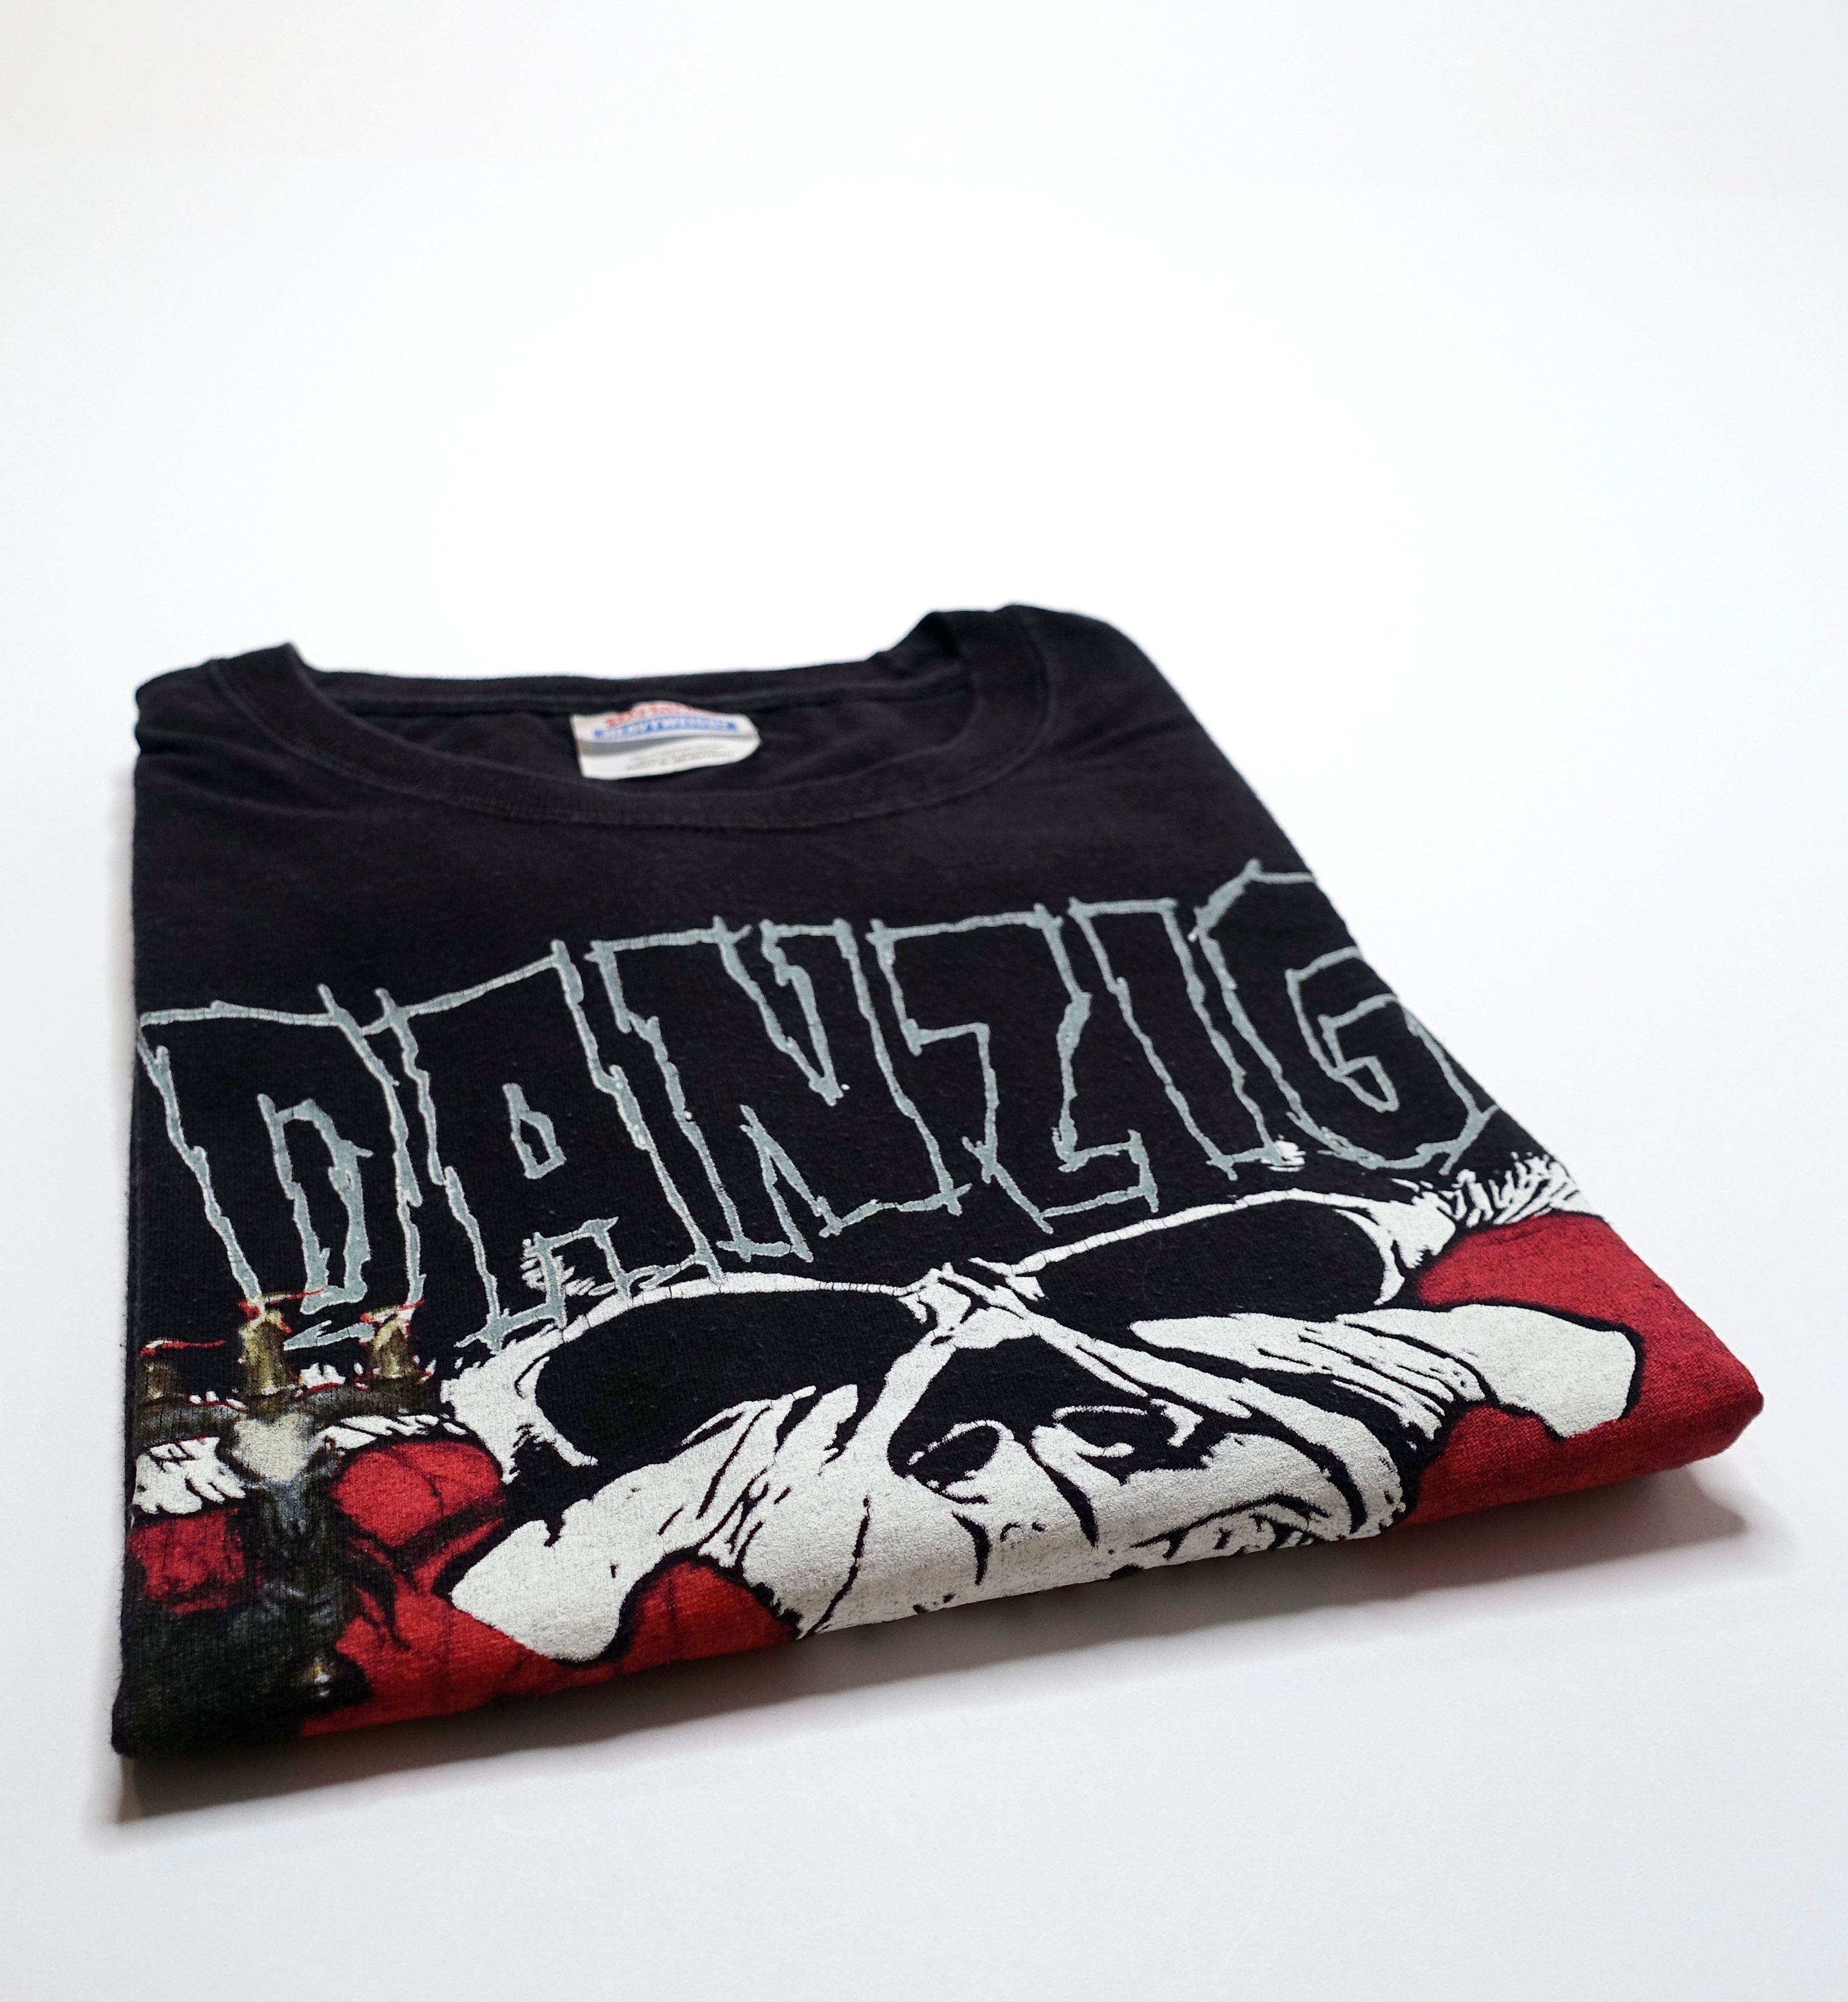 Danzig - Deth Red Sabaoth 2010 Tour Shirt Size XL